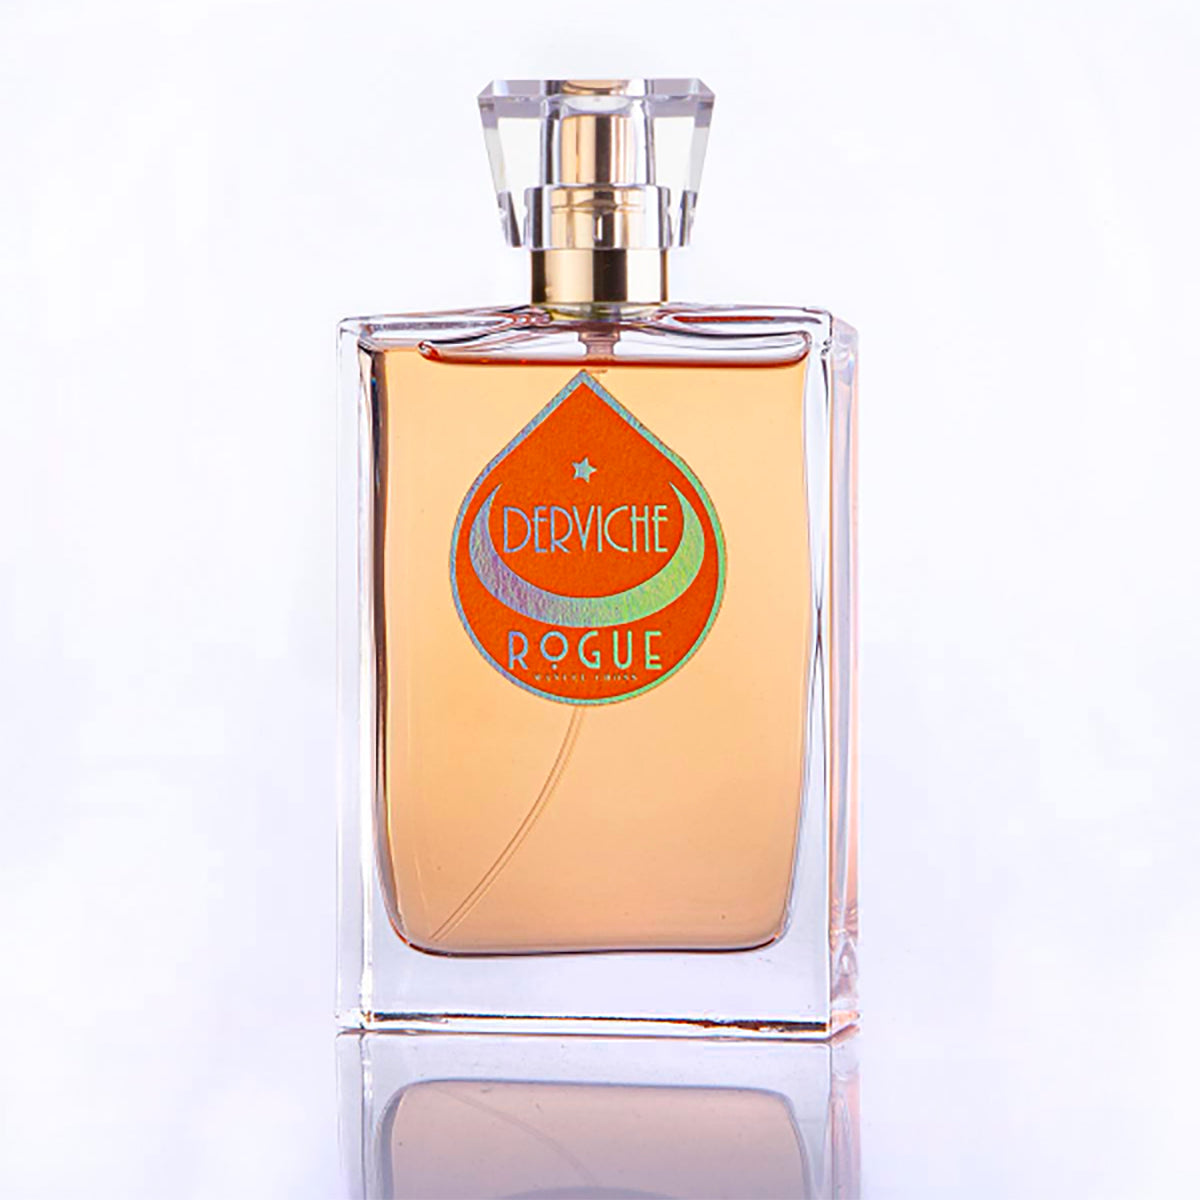 Derviche by Rogue Perfumery at Indigo